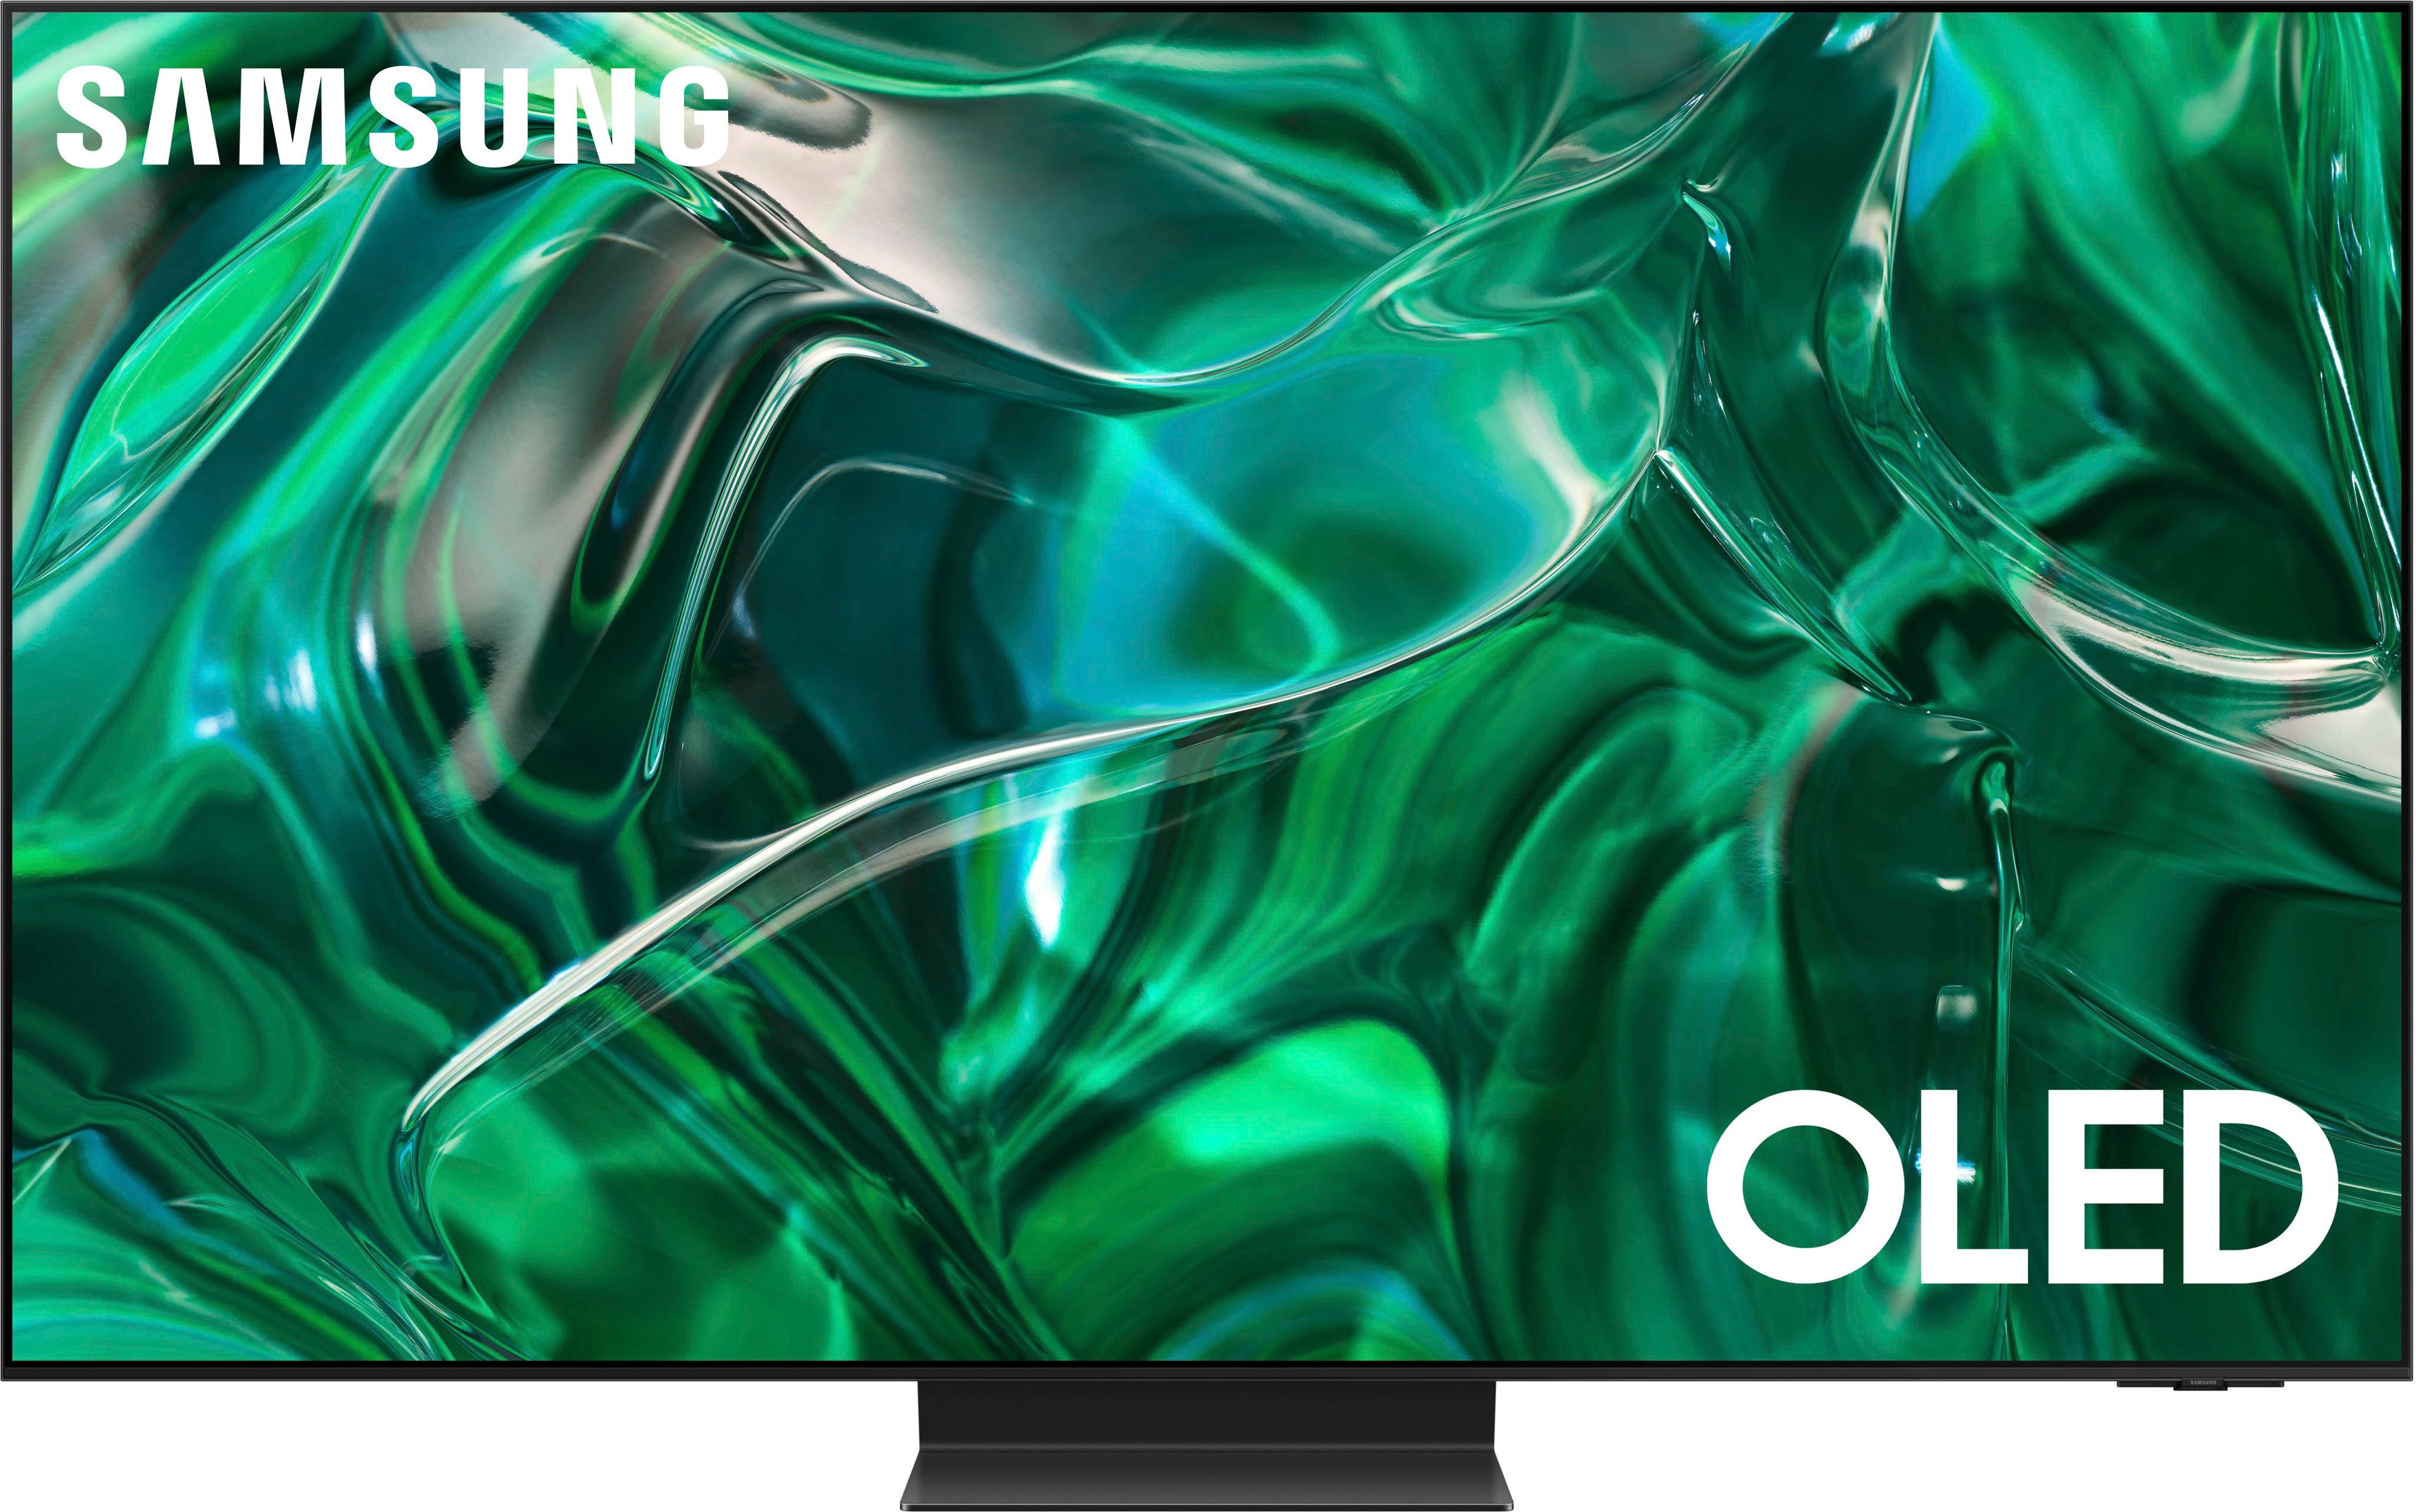 Samsung 55 Class LED Curved Q8C Series 2160p Smart 4K UHD TV with HDR  QN55Q8CAMFXZA - Best Buy